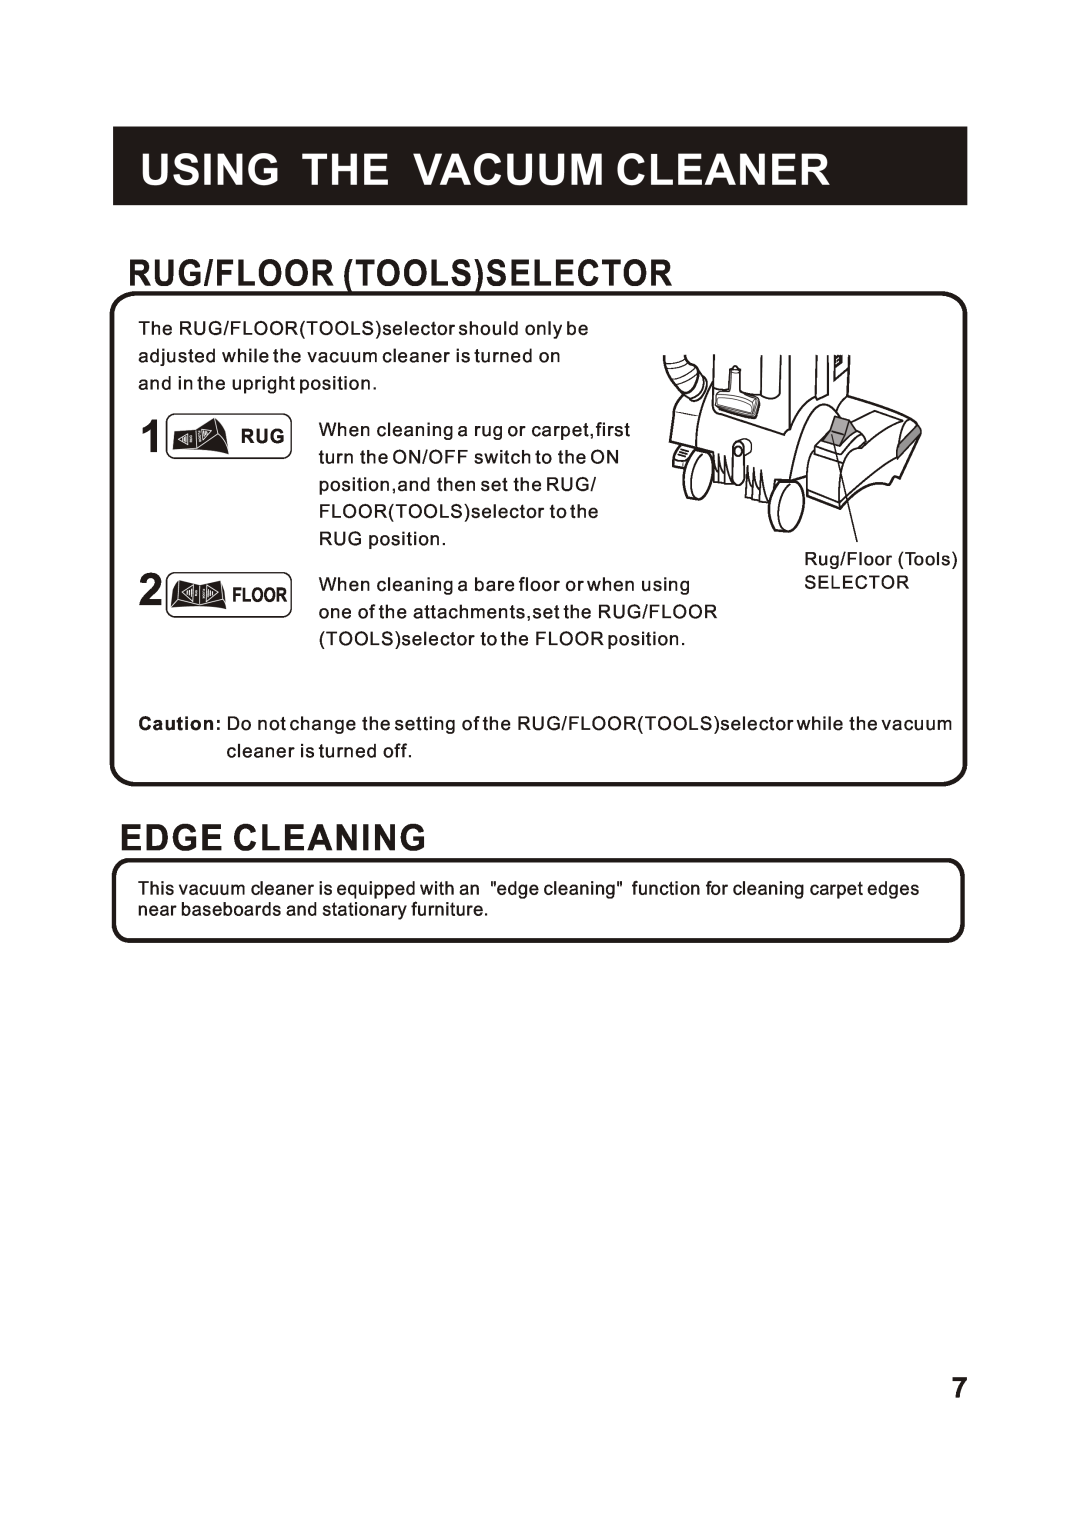 Fantom Vacuum FM742C instruction manual Rug/Floor Toolsselector, Edge Cleaning, Using The Vacuum Cleaner 